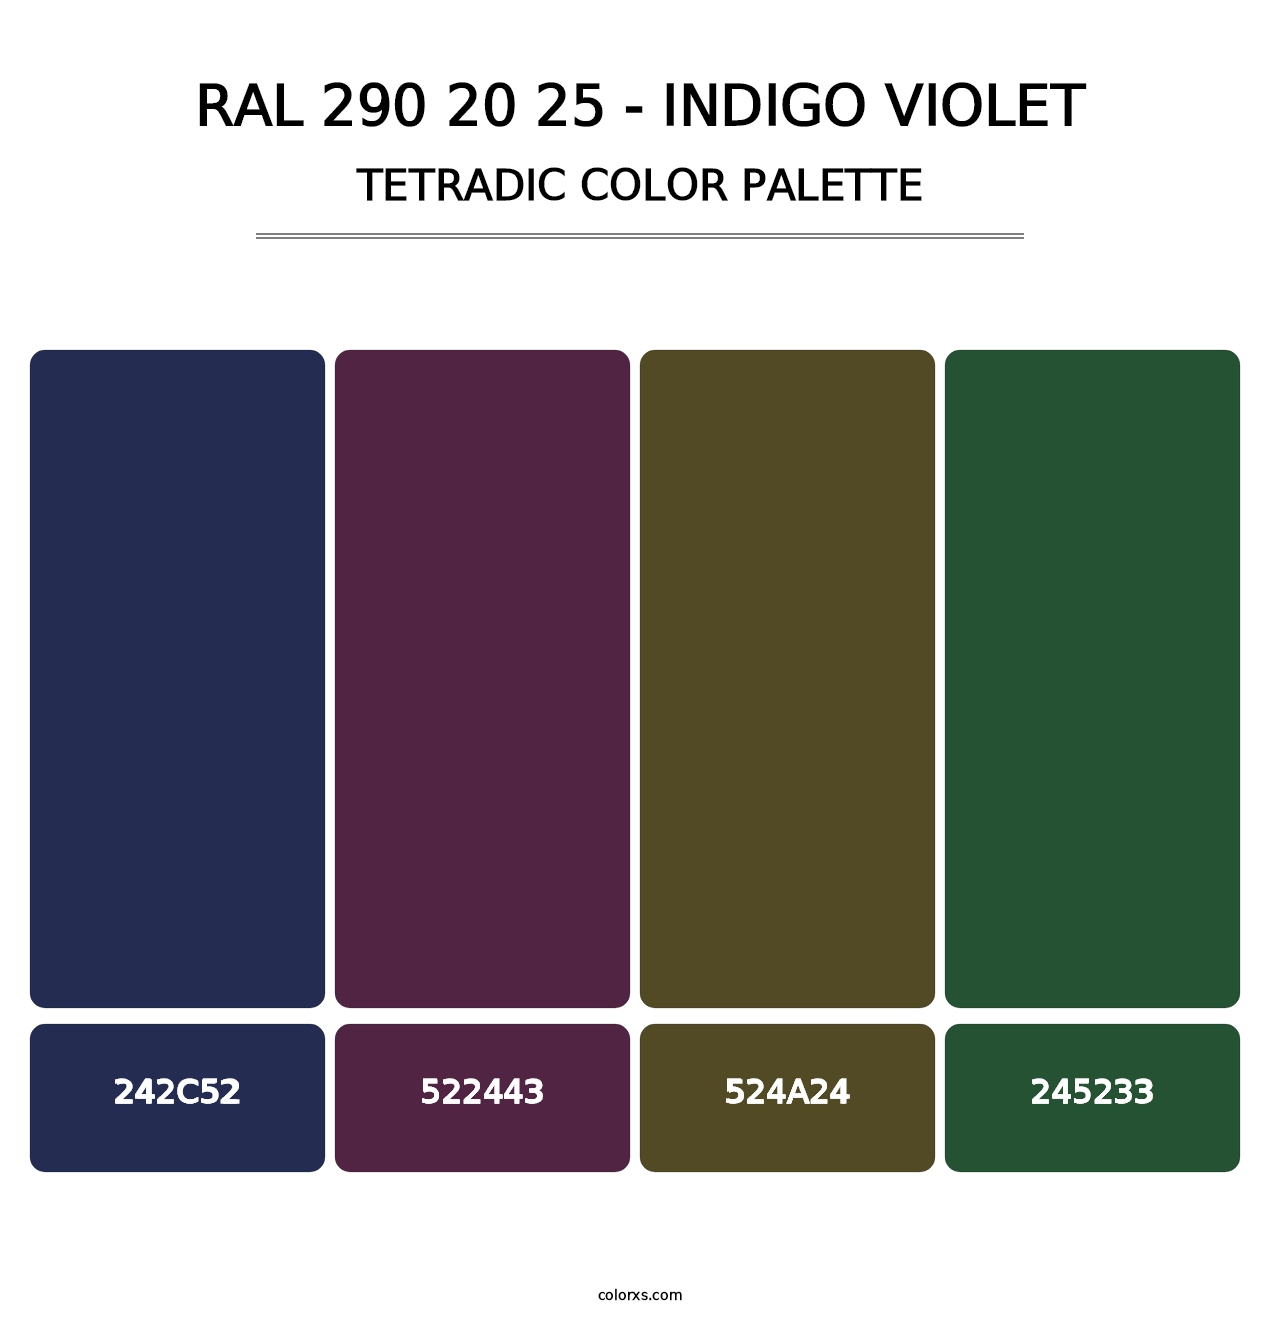 RAL 290 20 25 - Indigo Violet - Tetradic Color Palette